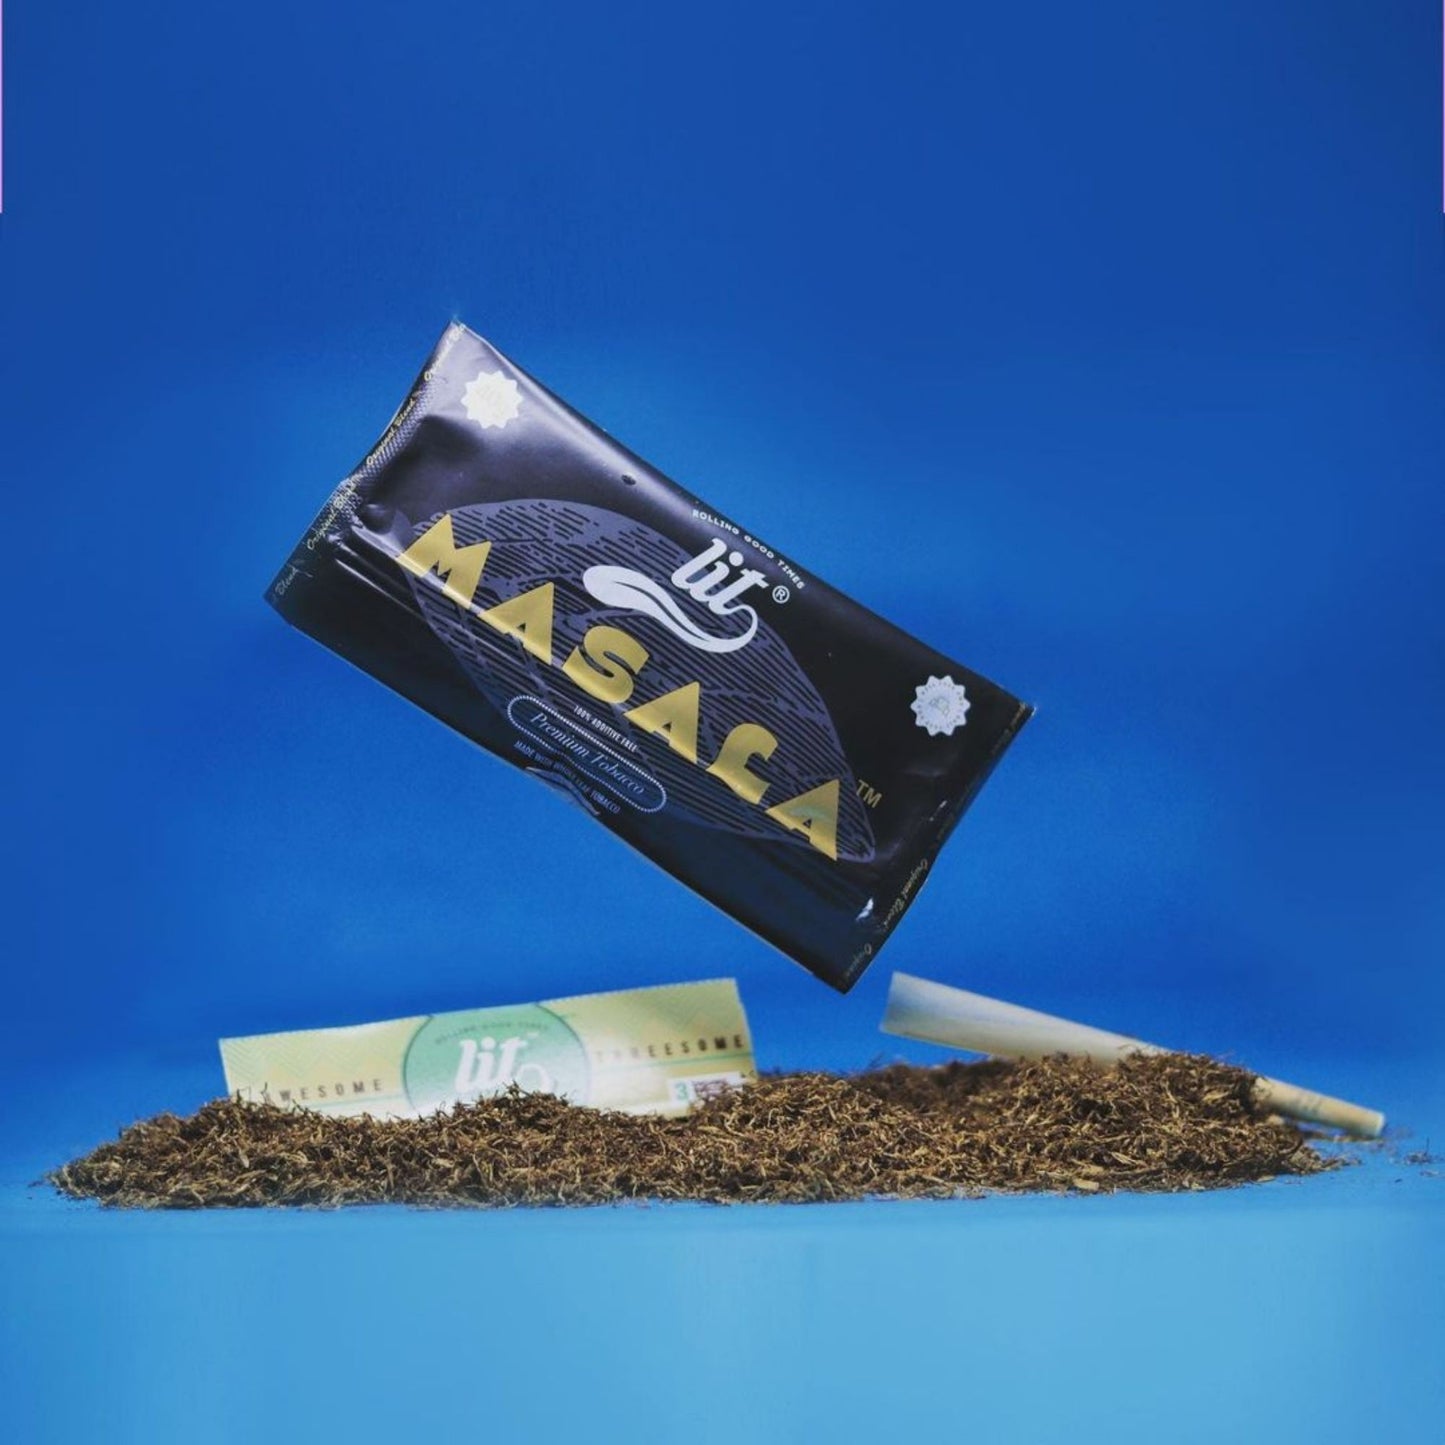 LIT MASALA premium rolling tobacco 40gms